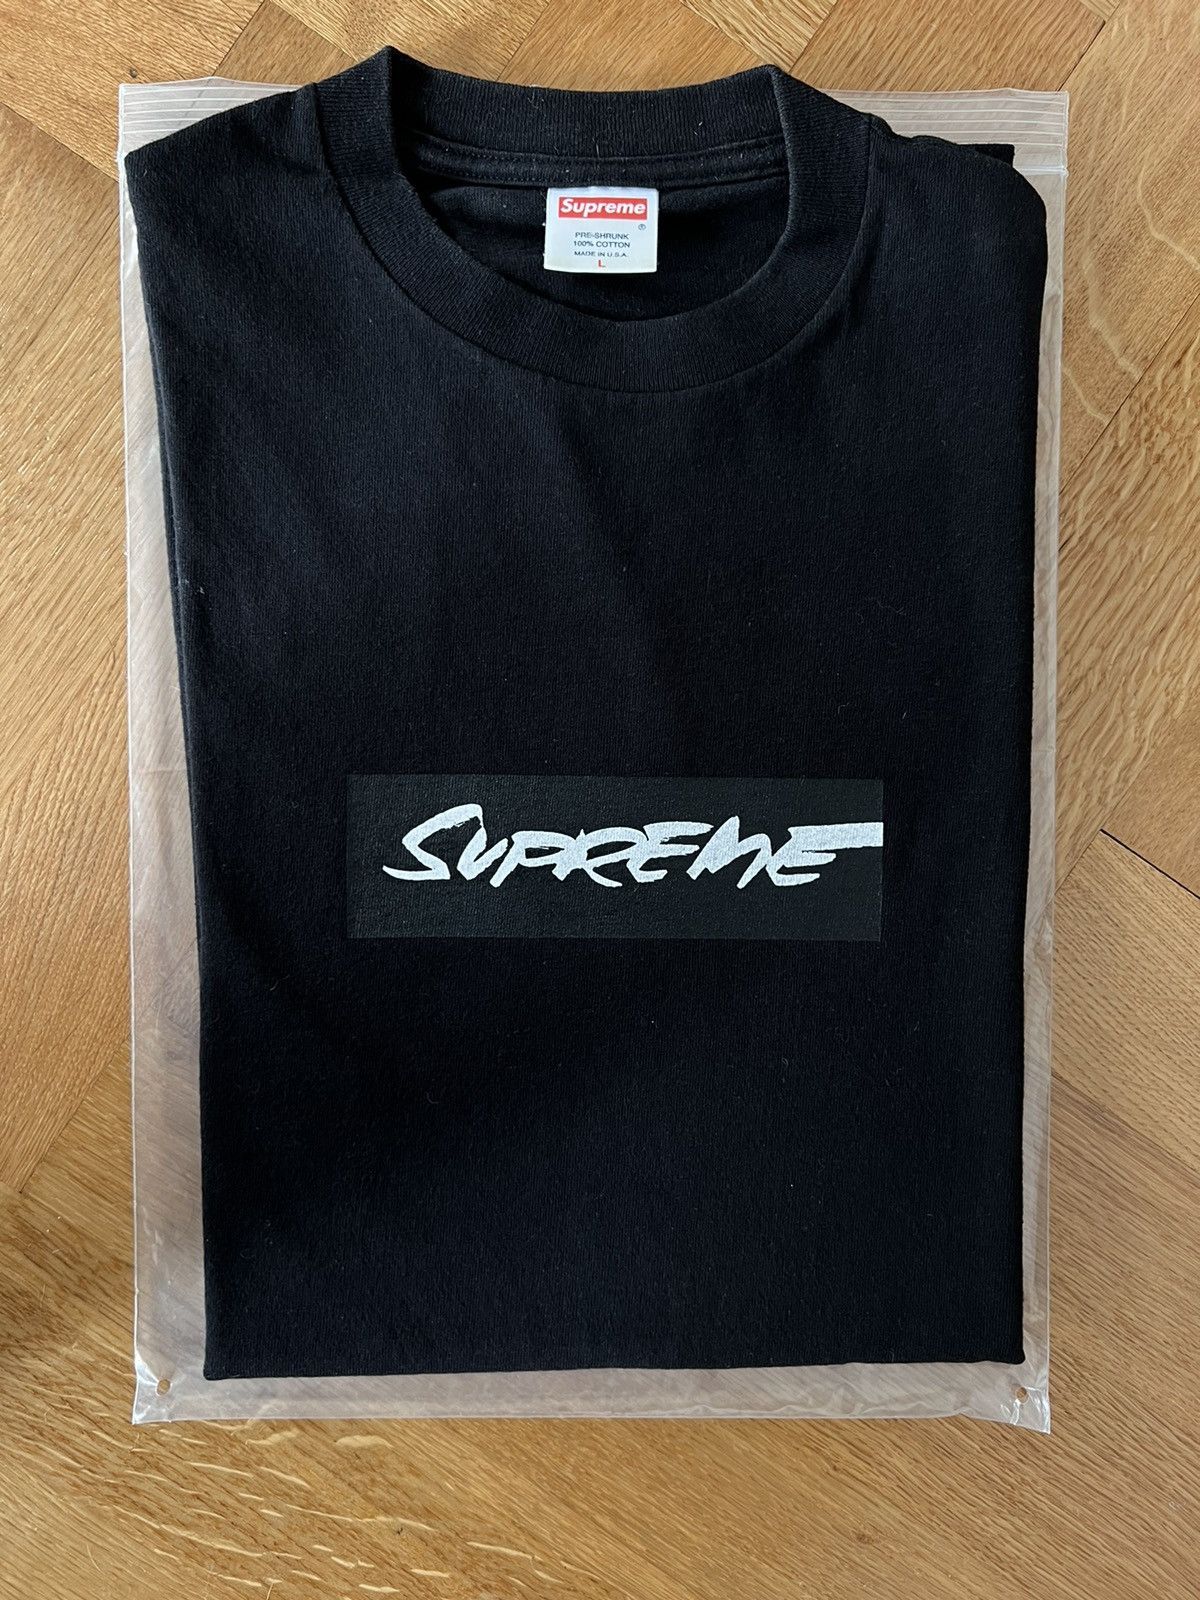 Supreme Supreme Silly Thing x Futura box logo black | Grailed